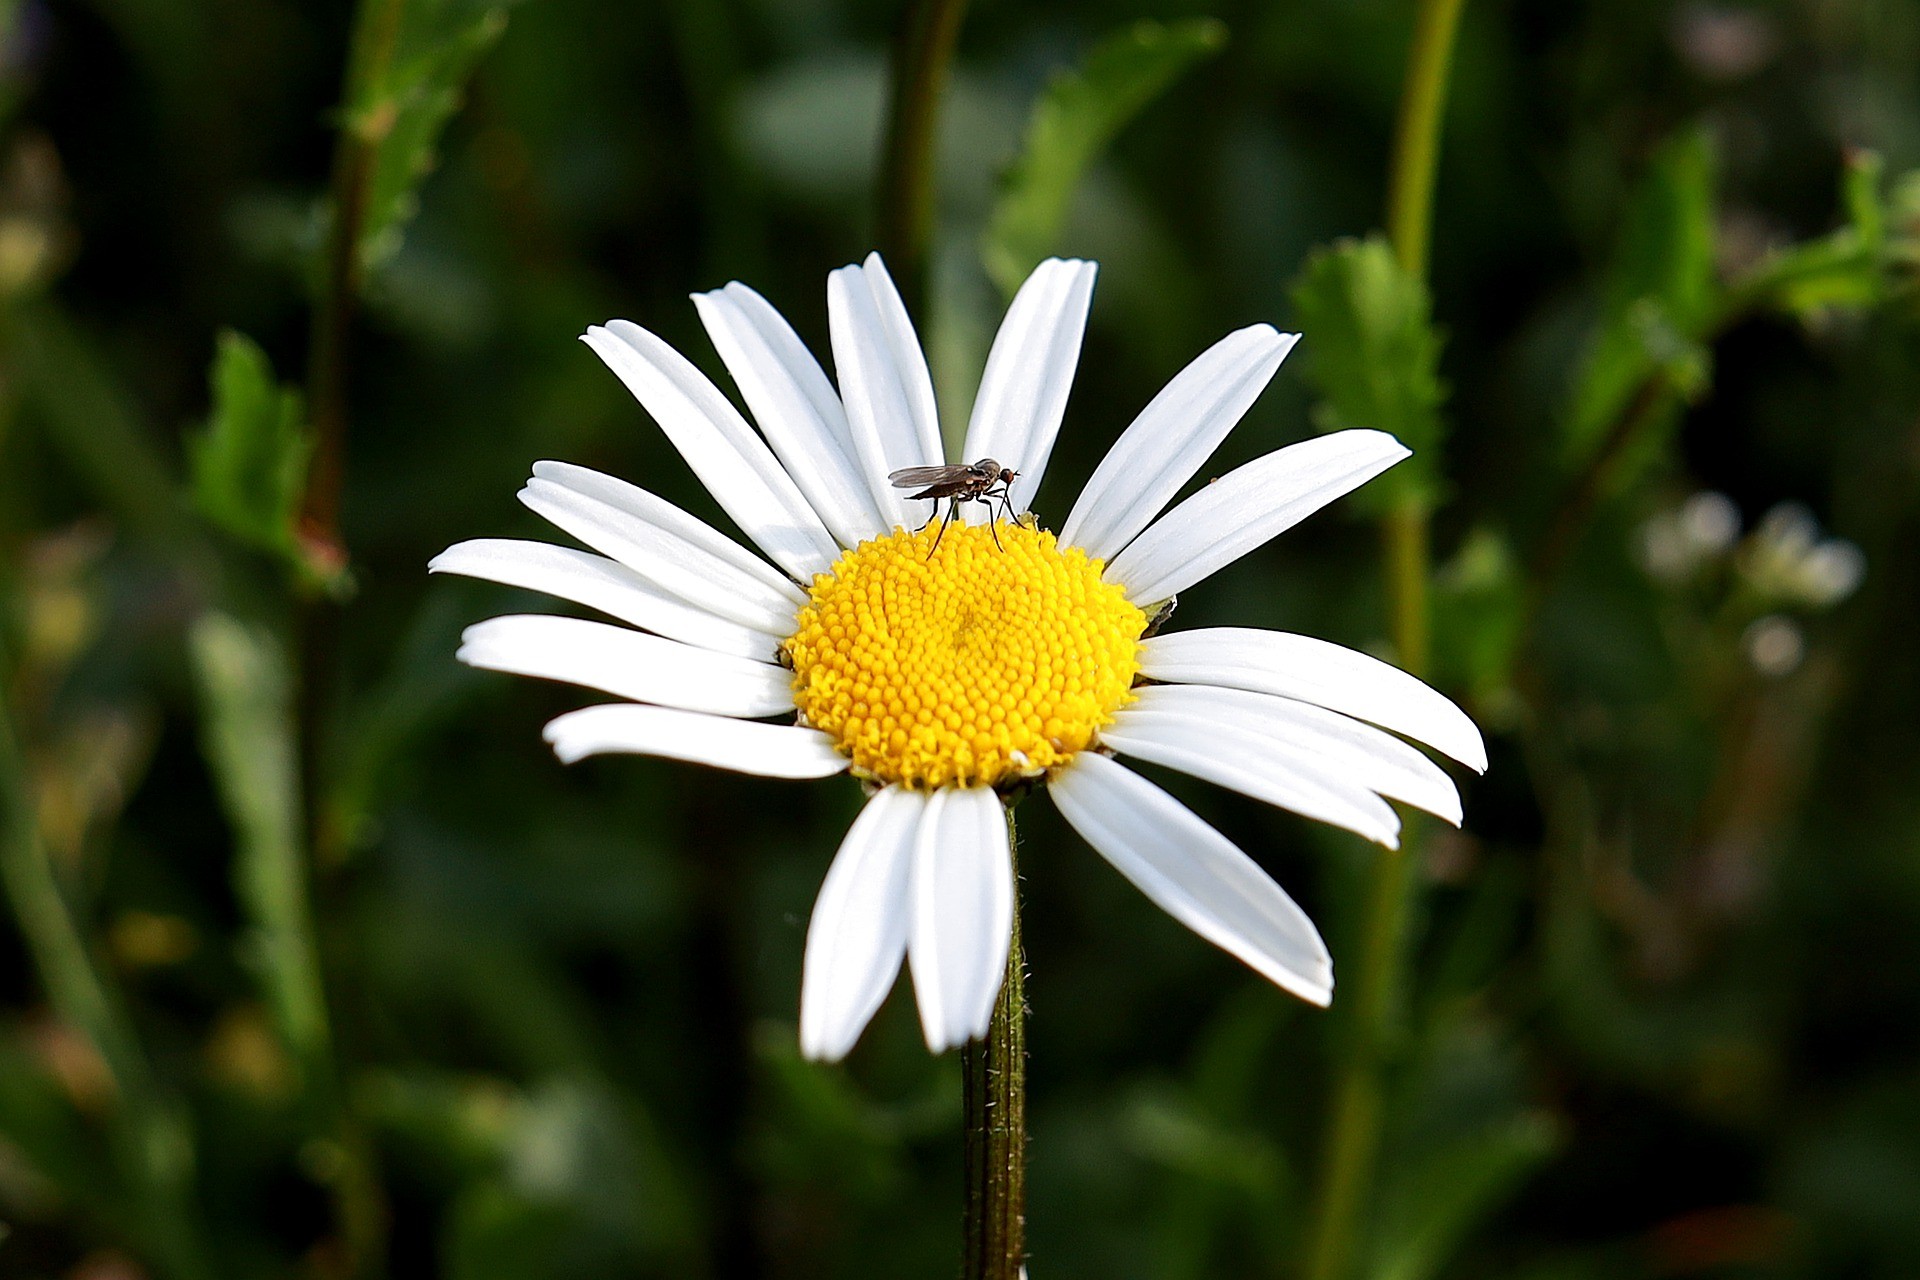 Stechmücken (Quelle: Pixabay.com)